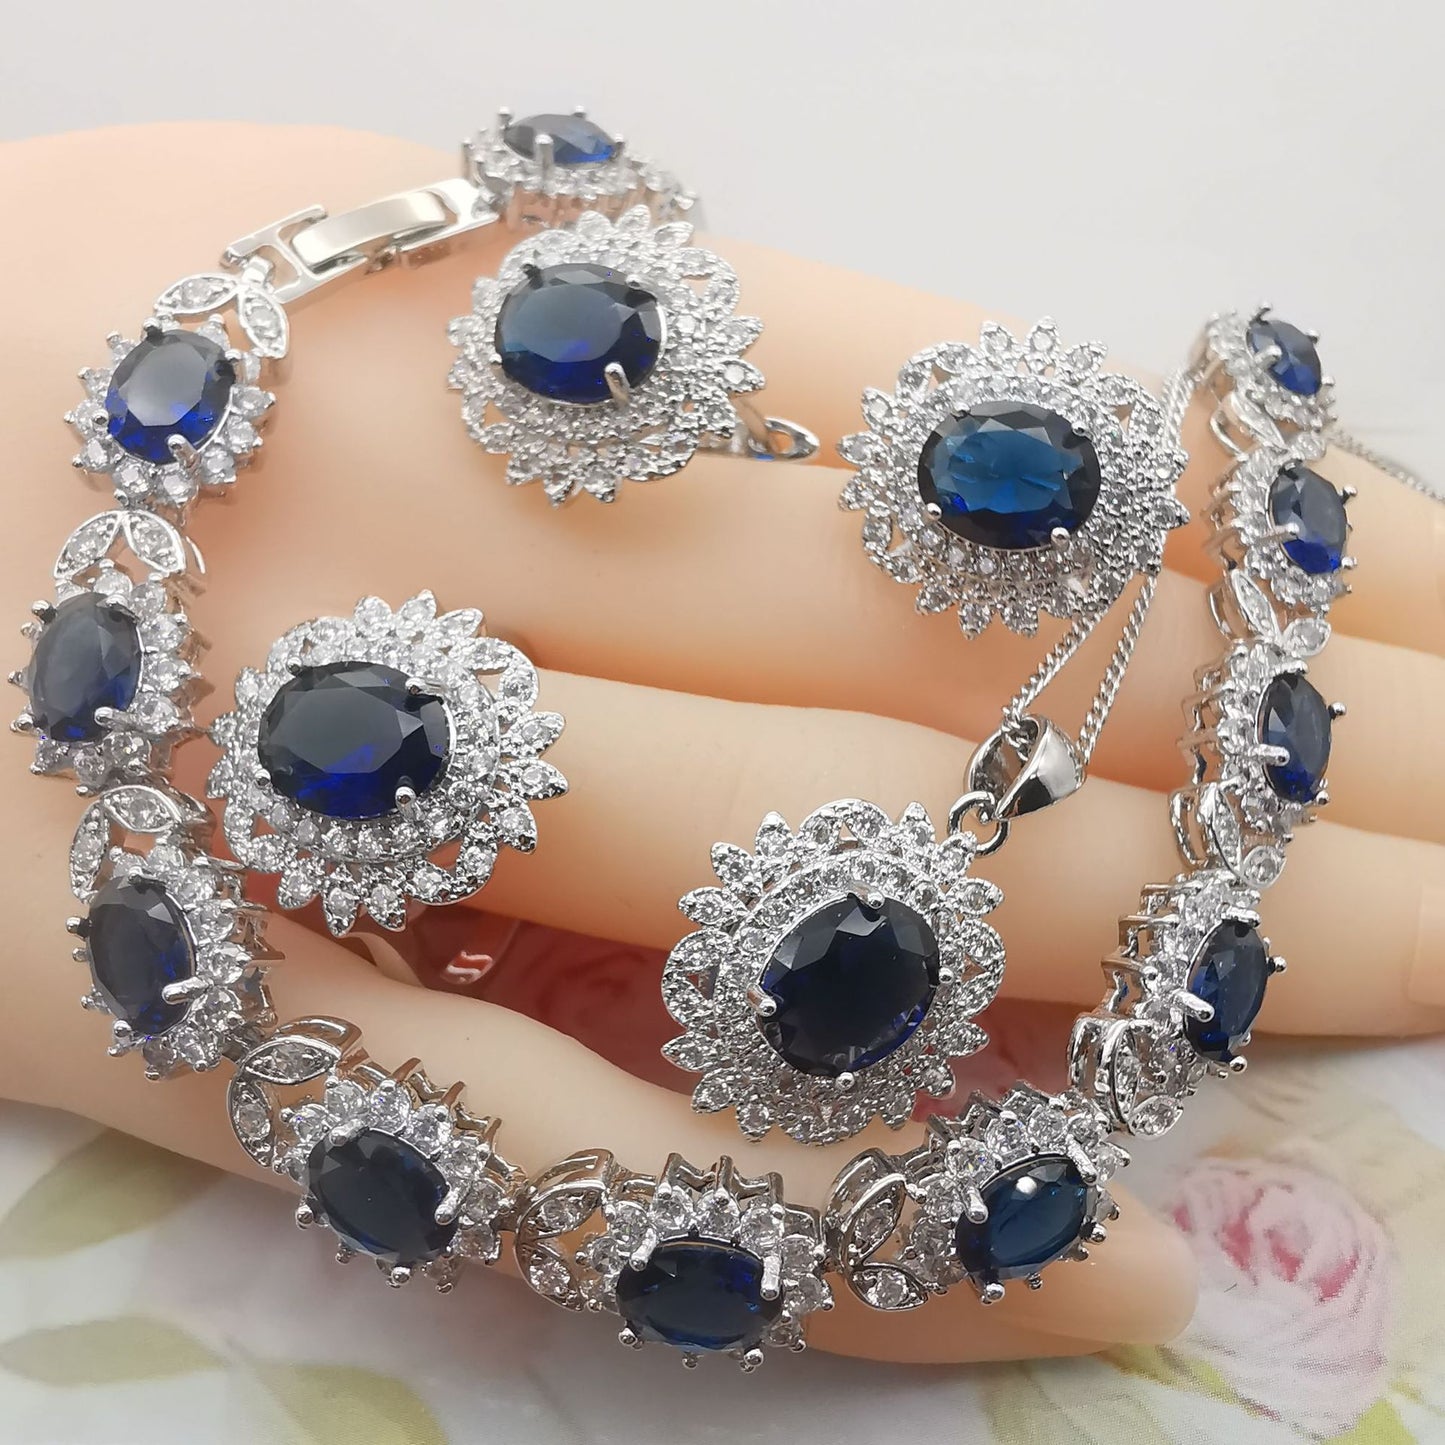 Four-piece Jewelry Set Luxurious Temperament Garnet Red